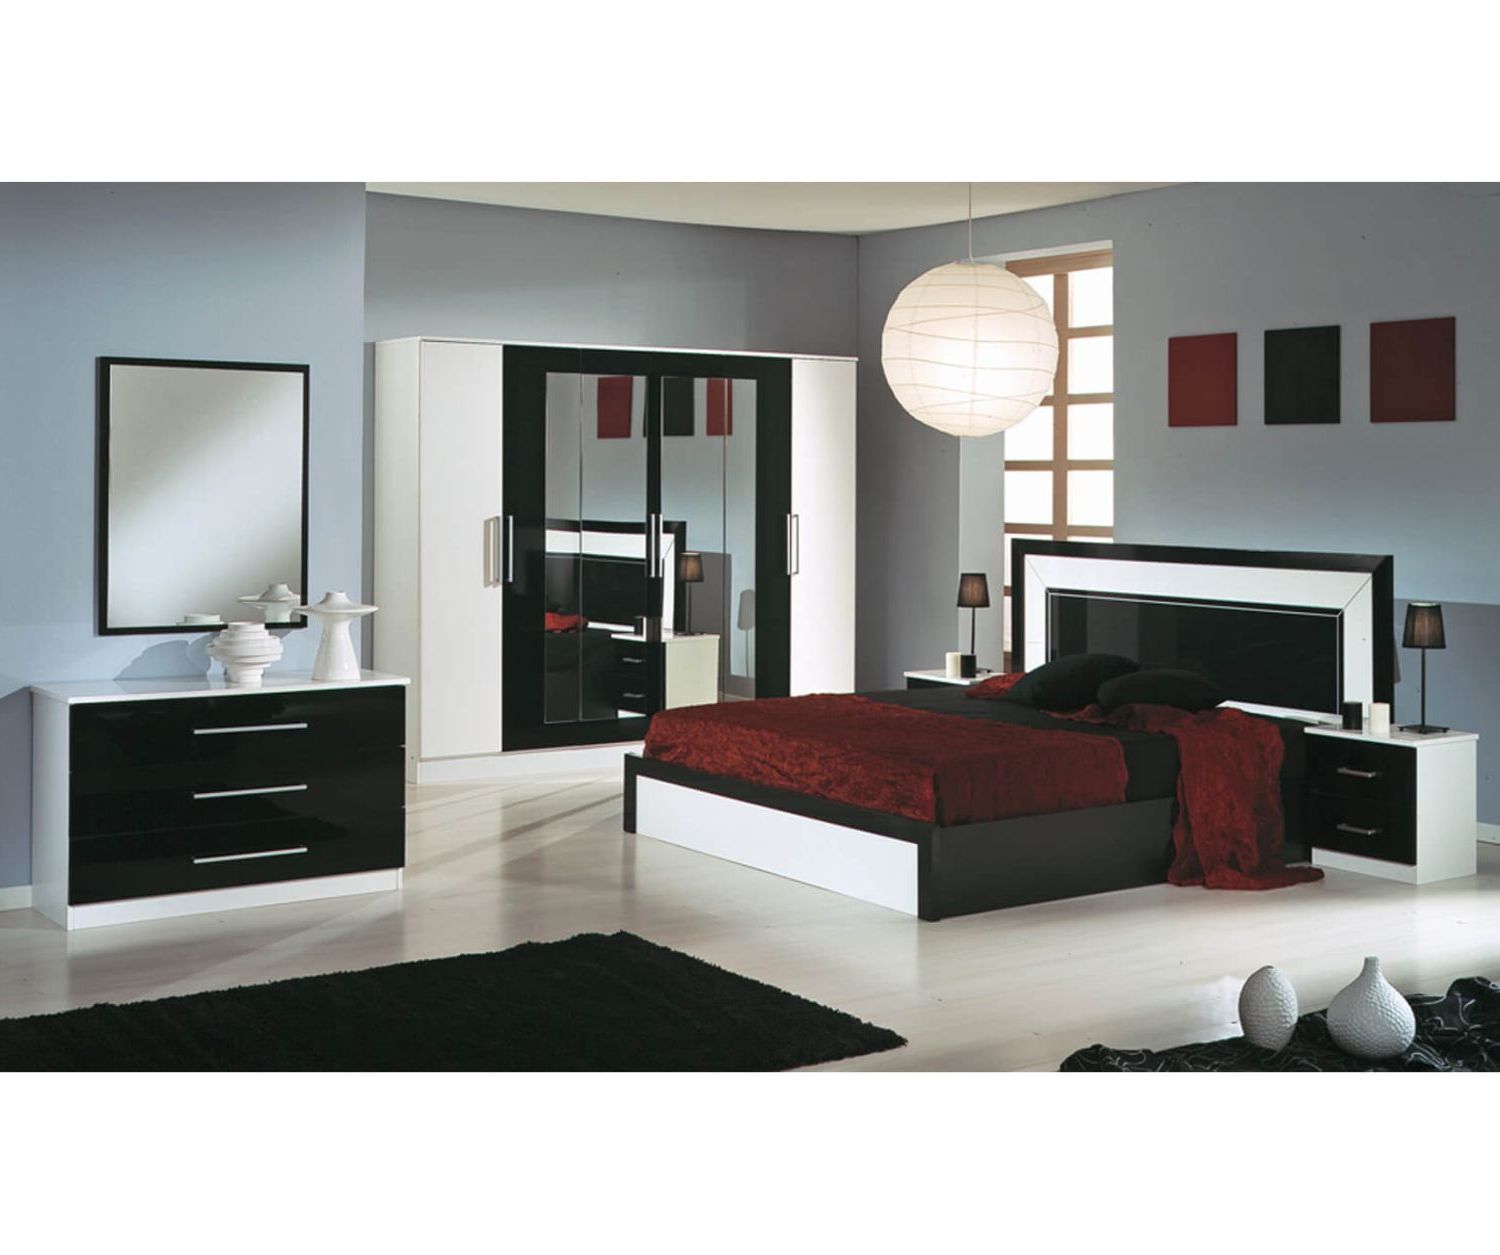 Dima Mobili Miami Black And White Bedroom Set With 6 Door Wardrobe Regarding Black And White Wardrobes Set (View 11 of 20)